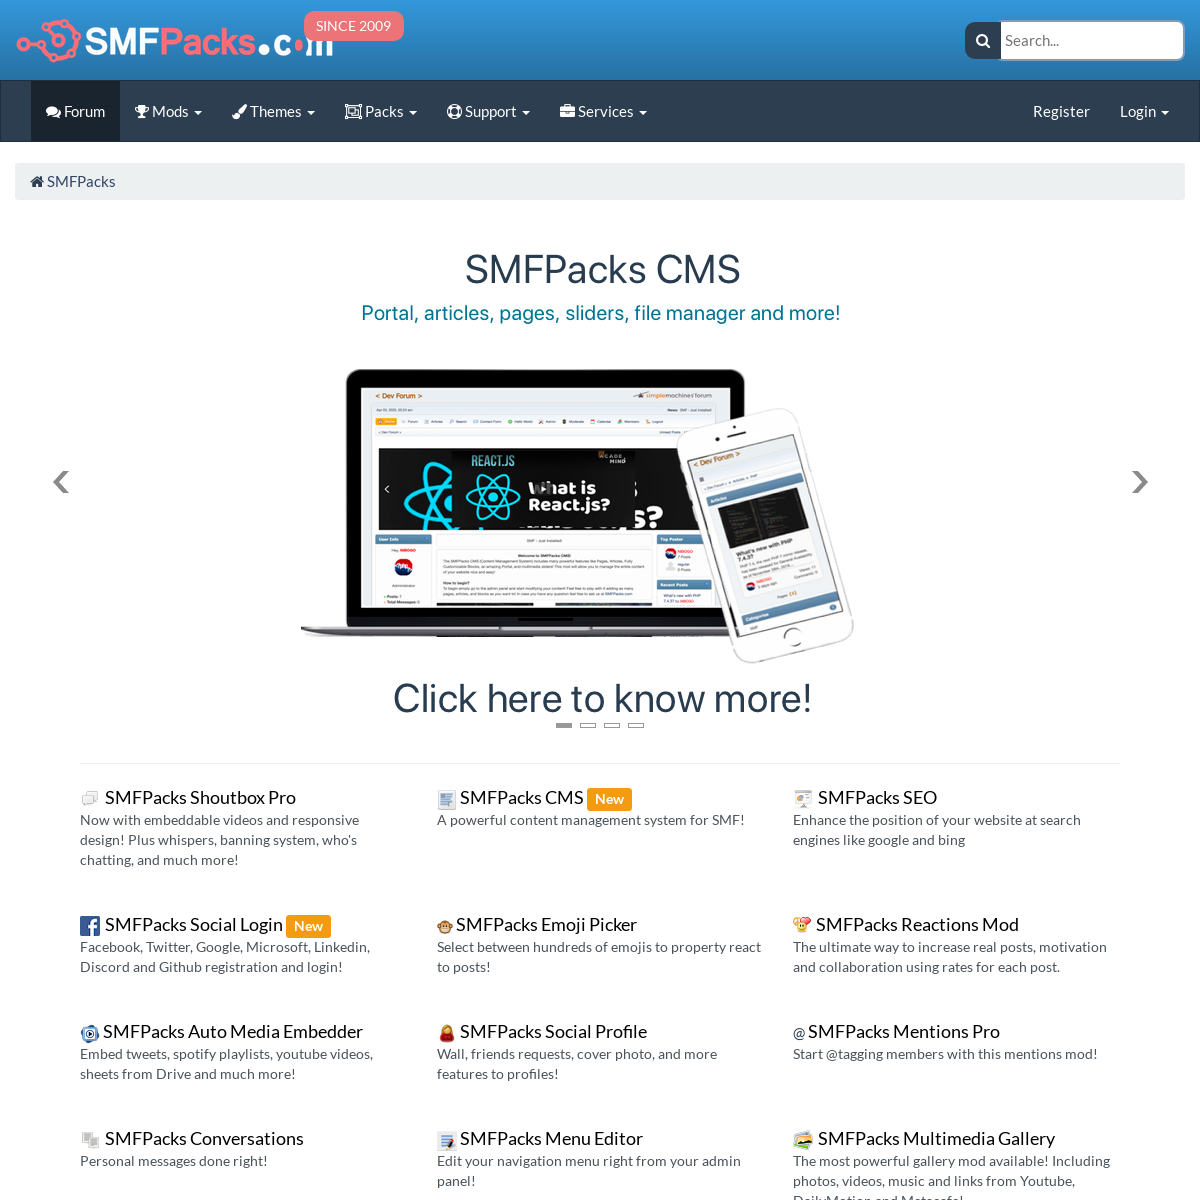 A complete backup of smfpacks.com